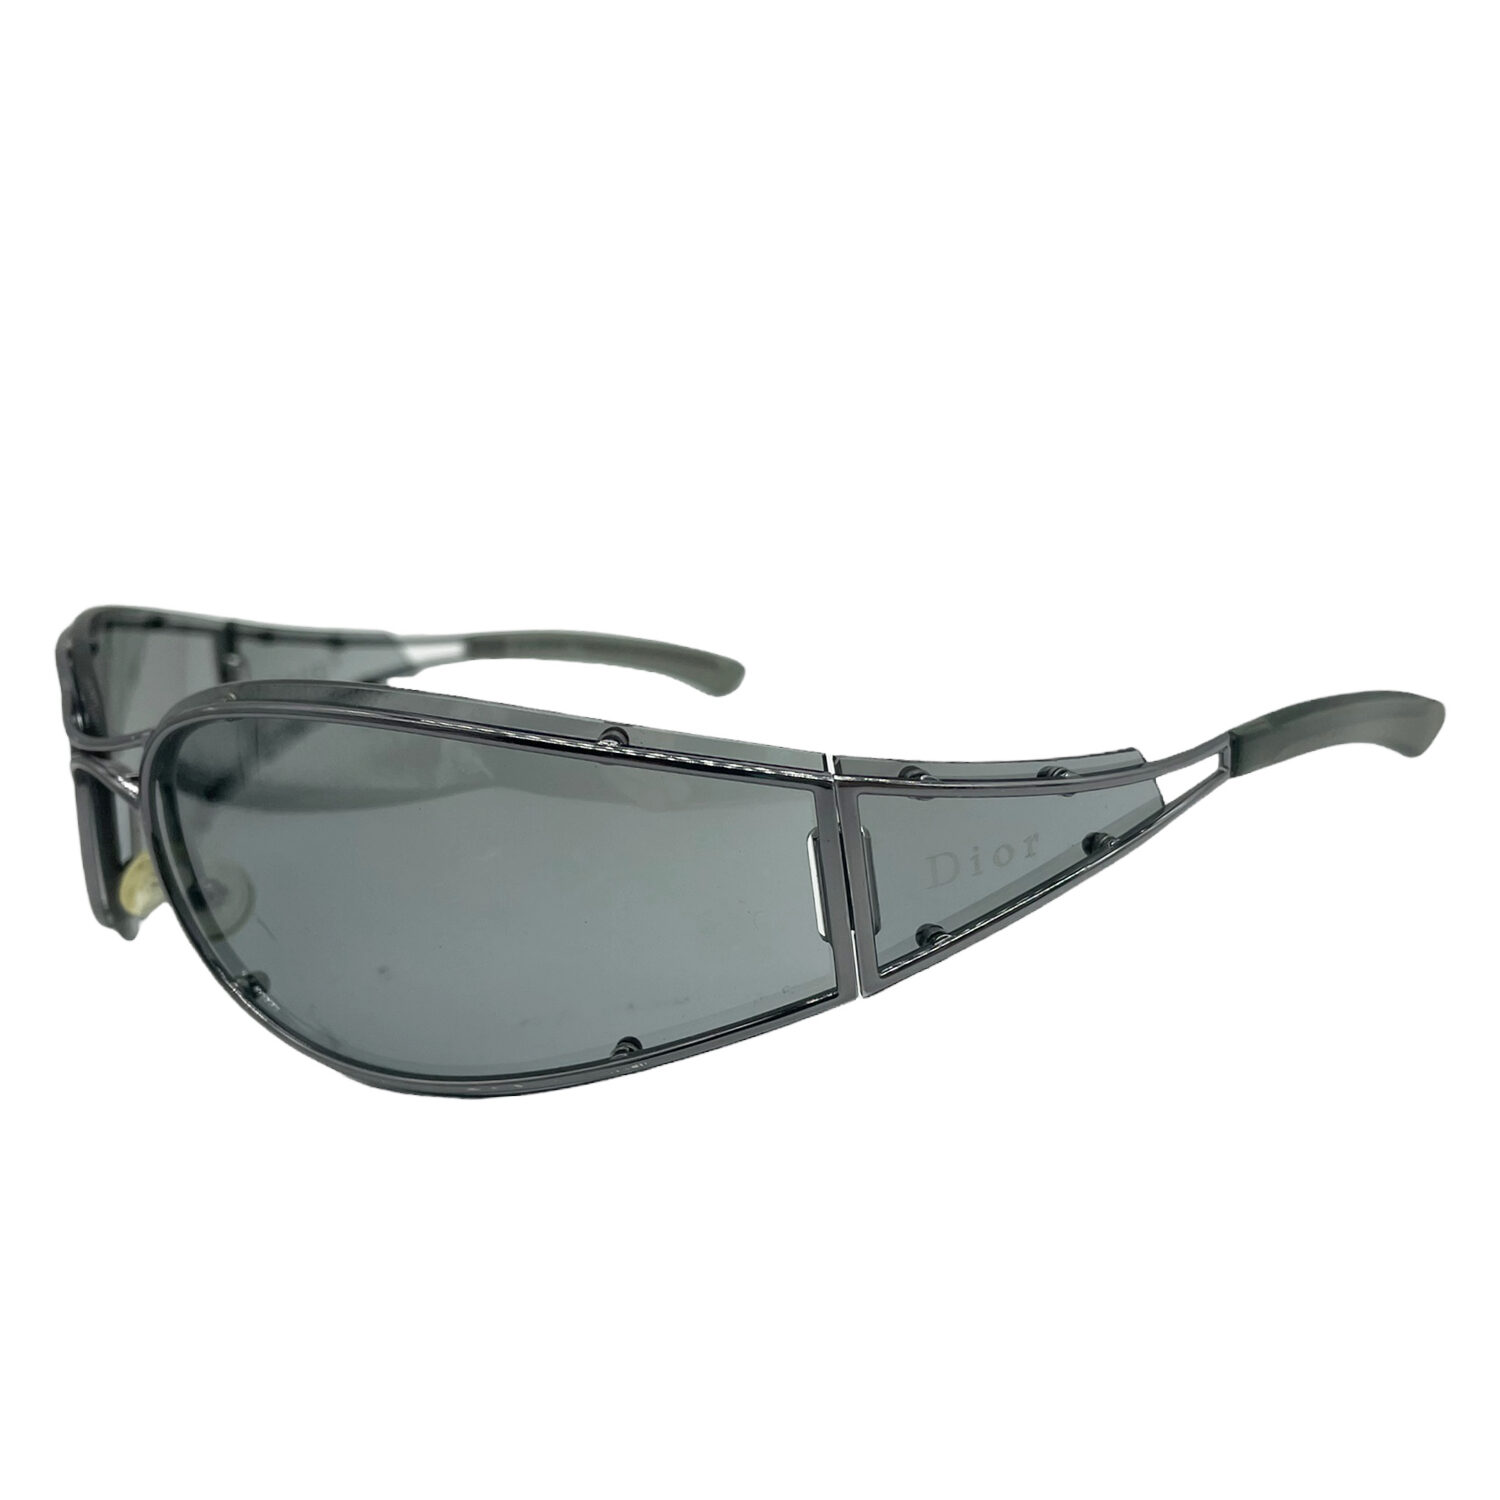 Vintage Dior RImless Wraparound Translucent Shield Sunglasses in Grey/Black | NITRYL